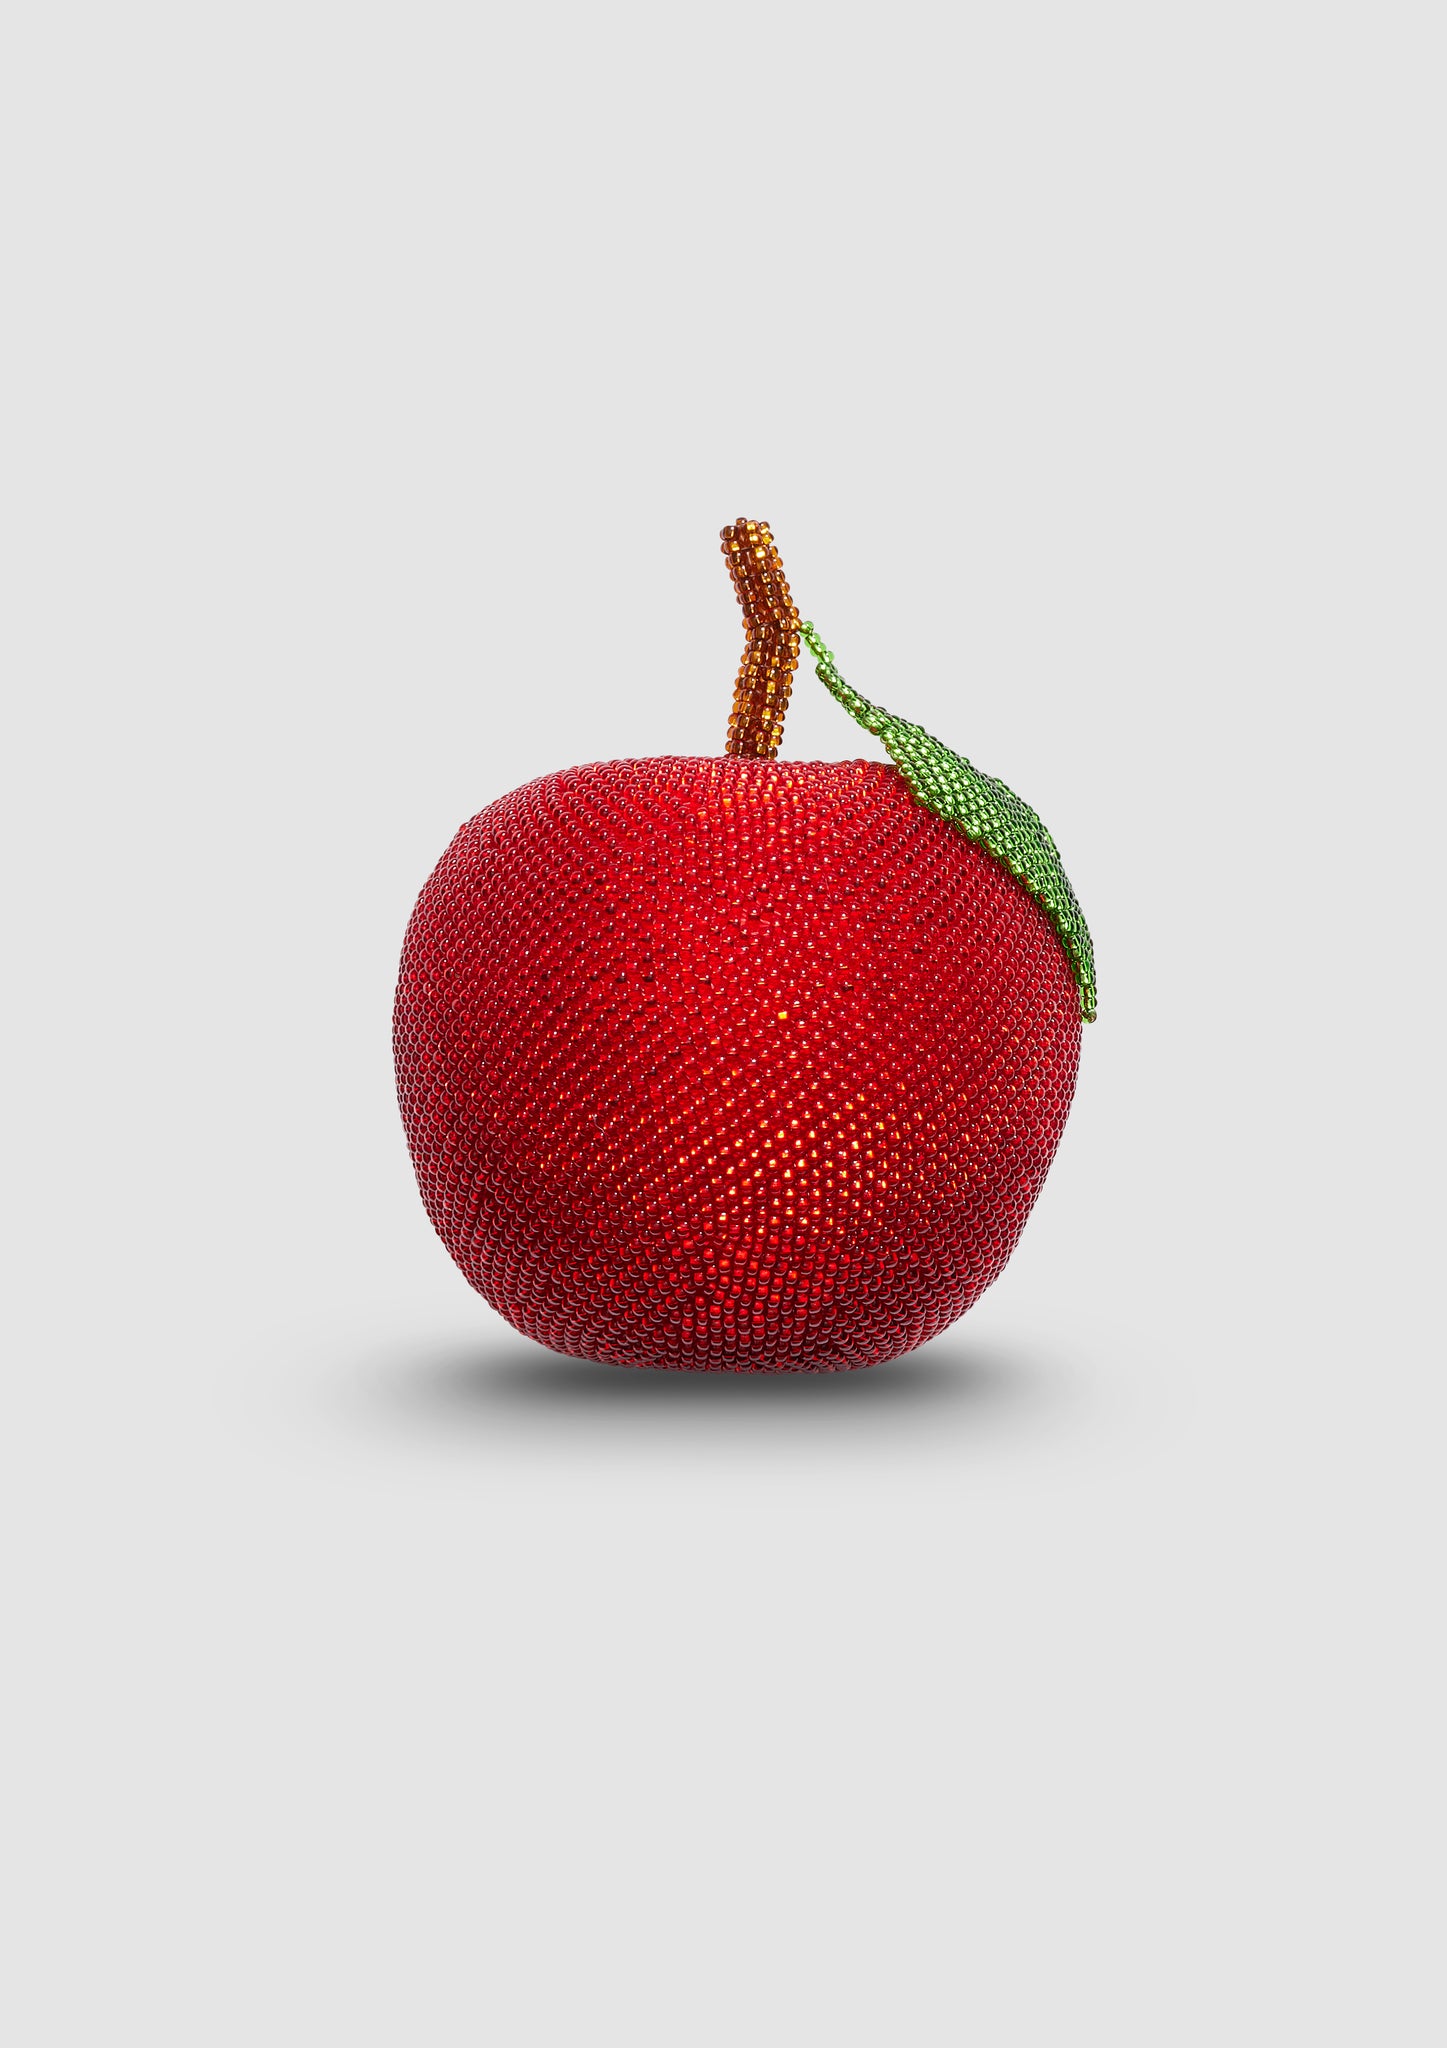 Big Red Apple Adornment